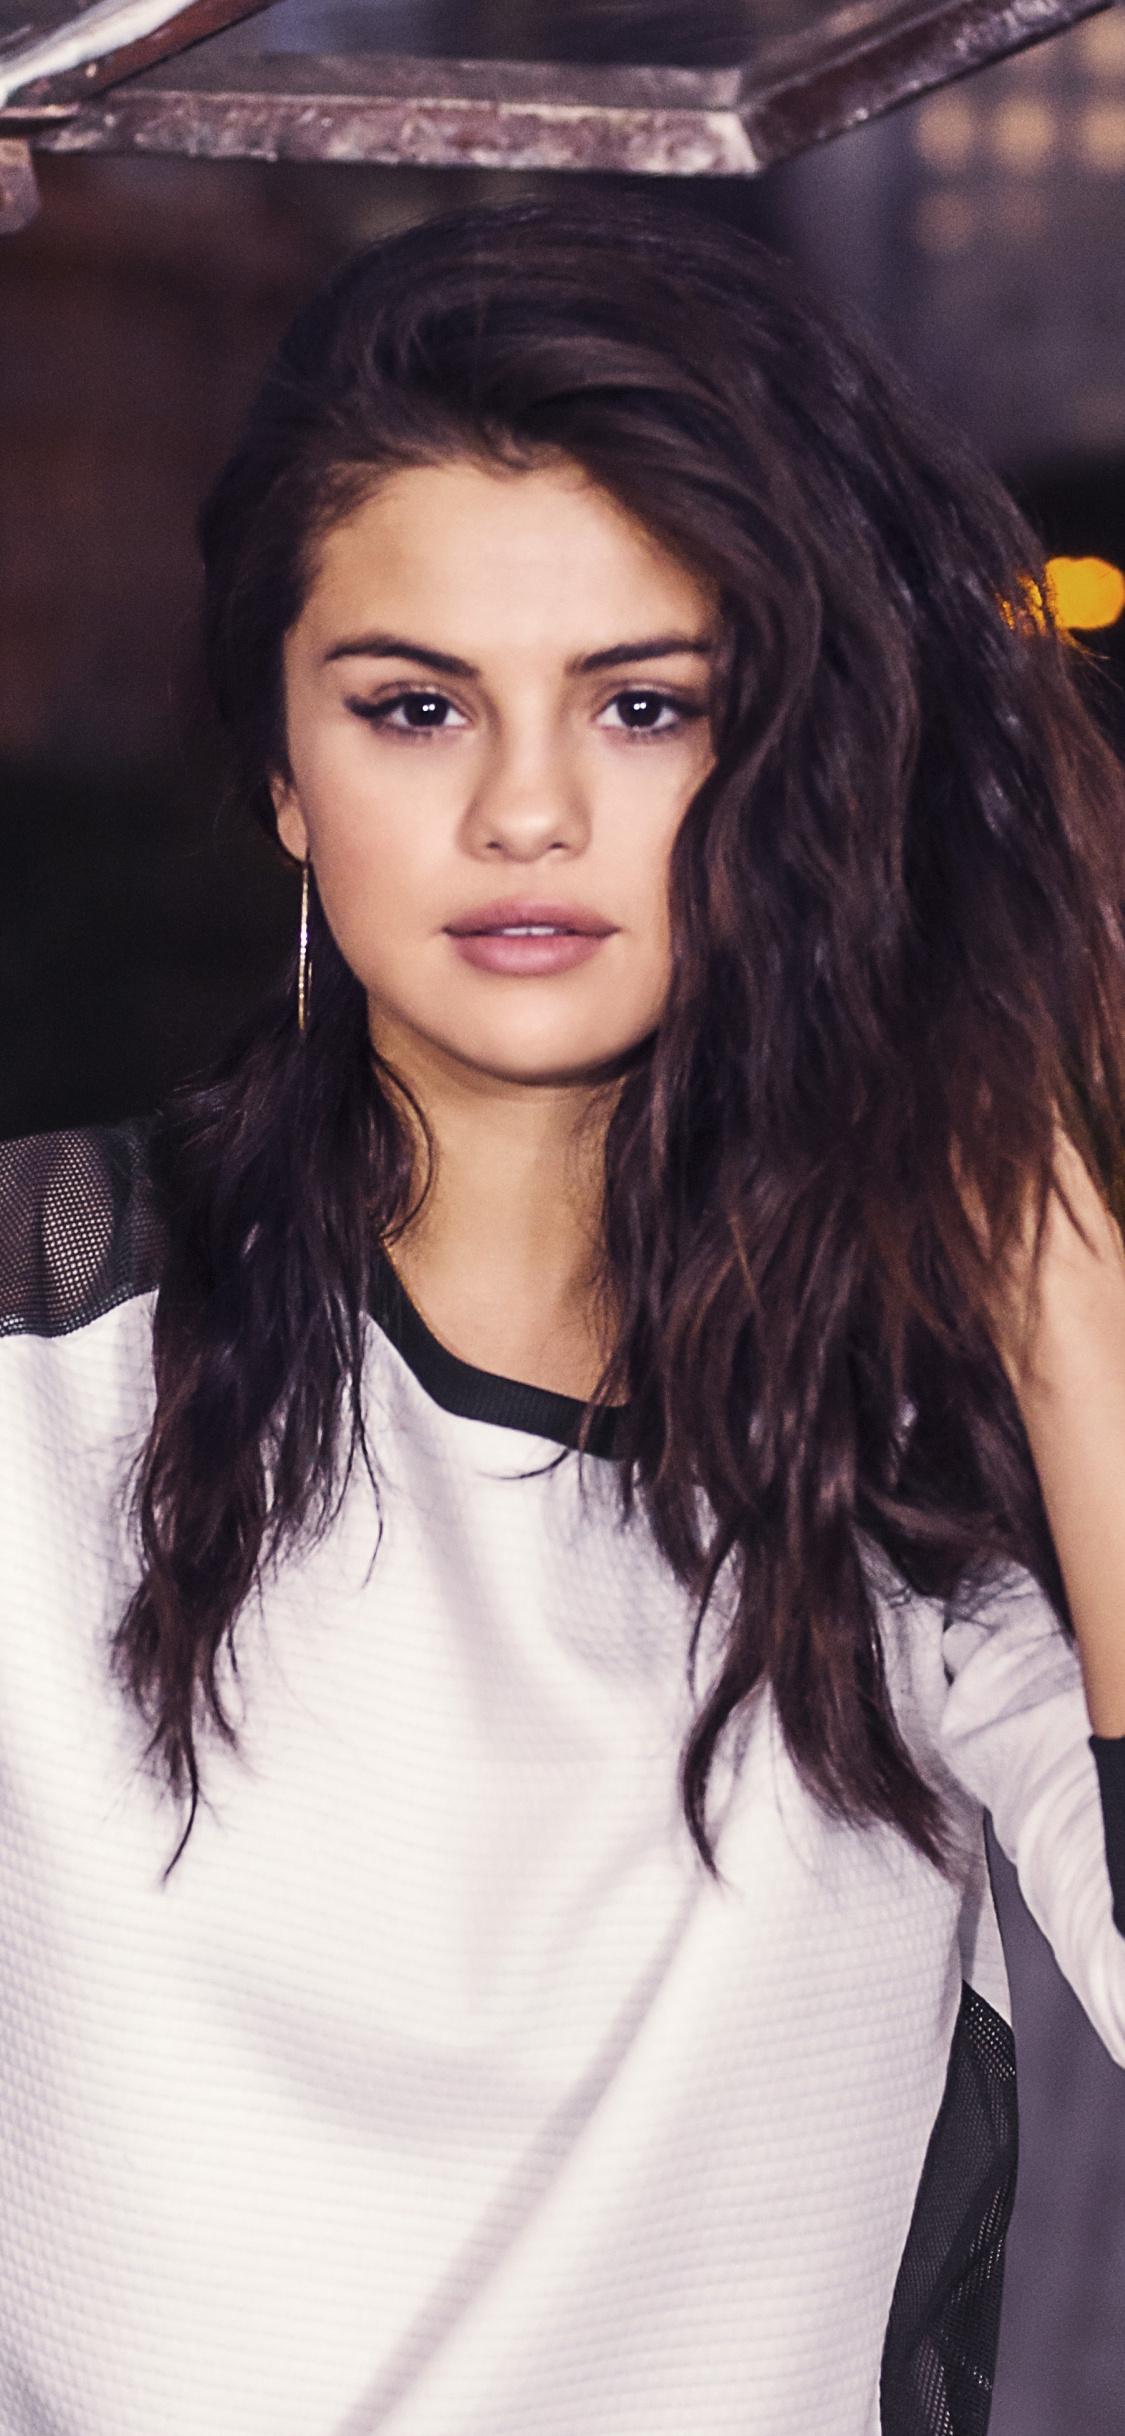 Selena Gomez Mobile Wallpapers Wallpaper Cave